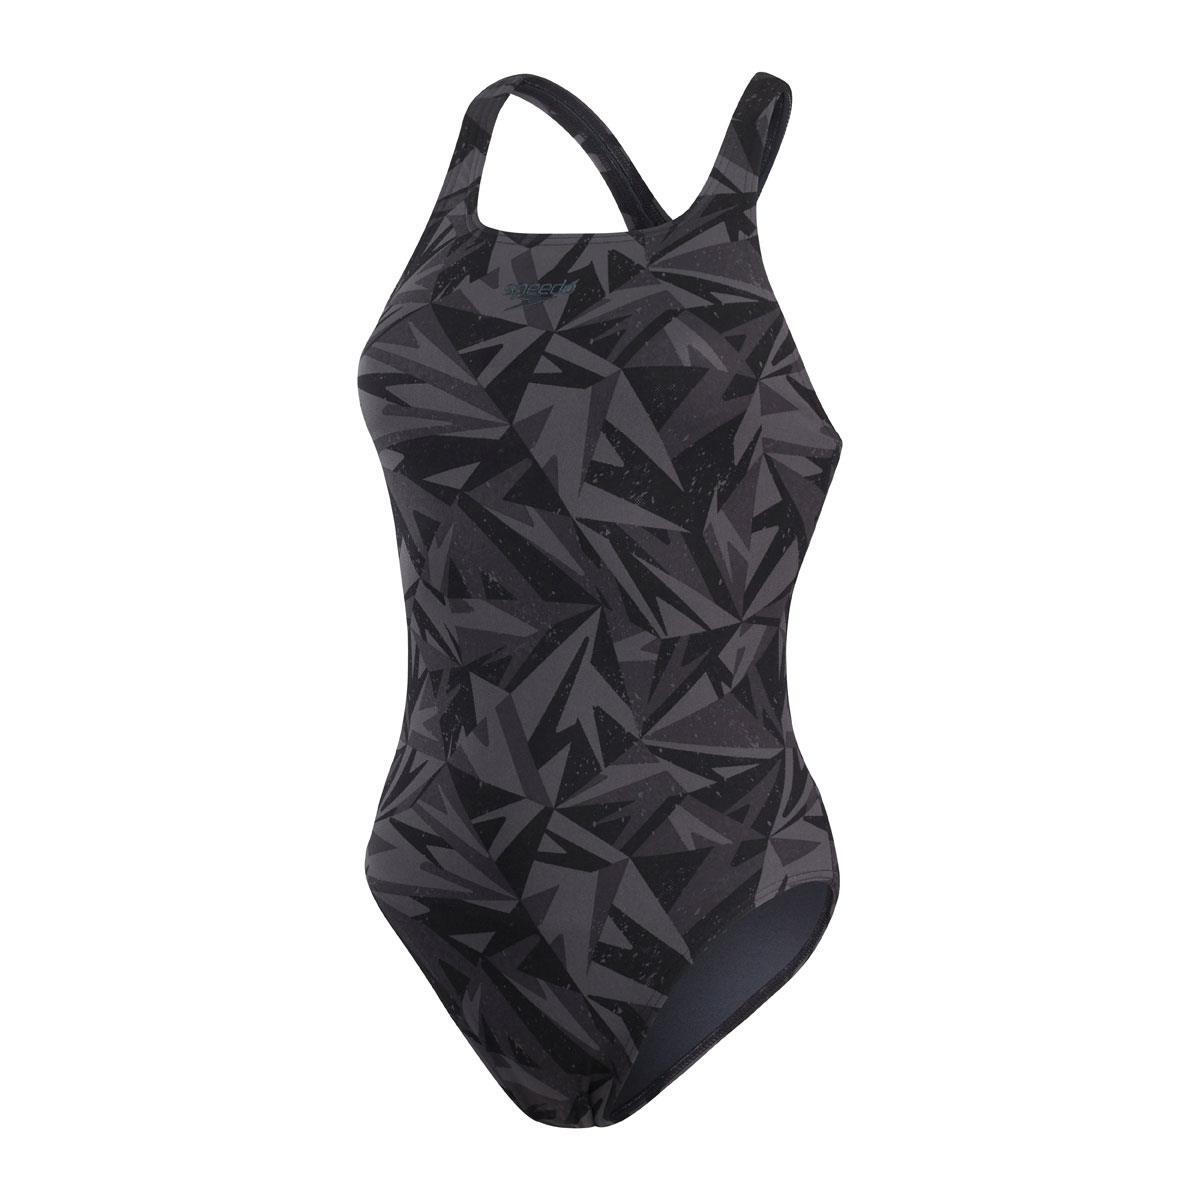 Speedo Women's Boom Logo Allover Medalist Swimsuit - Black/ Grey/ Charcoal 4/7